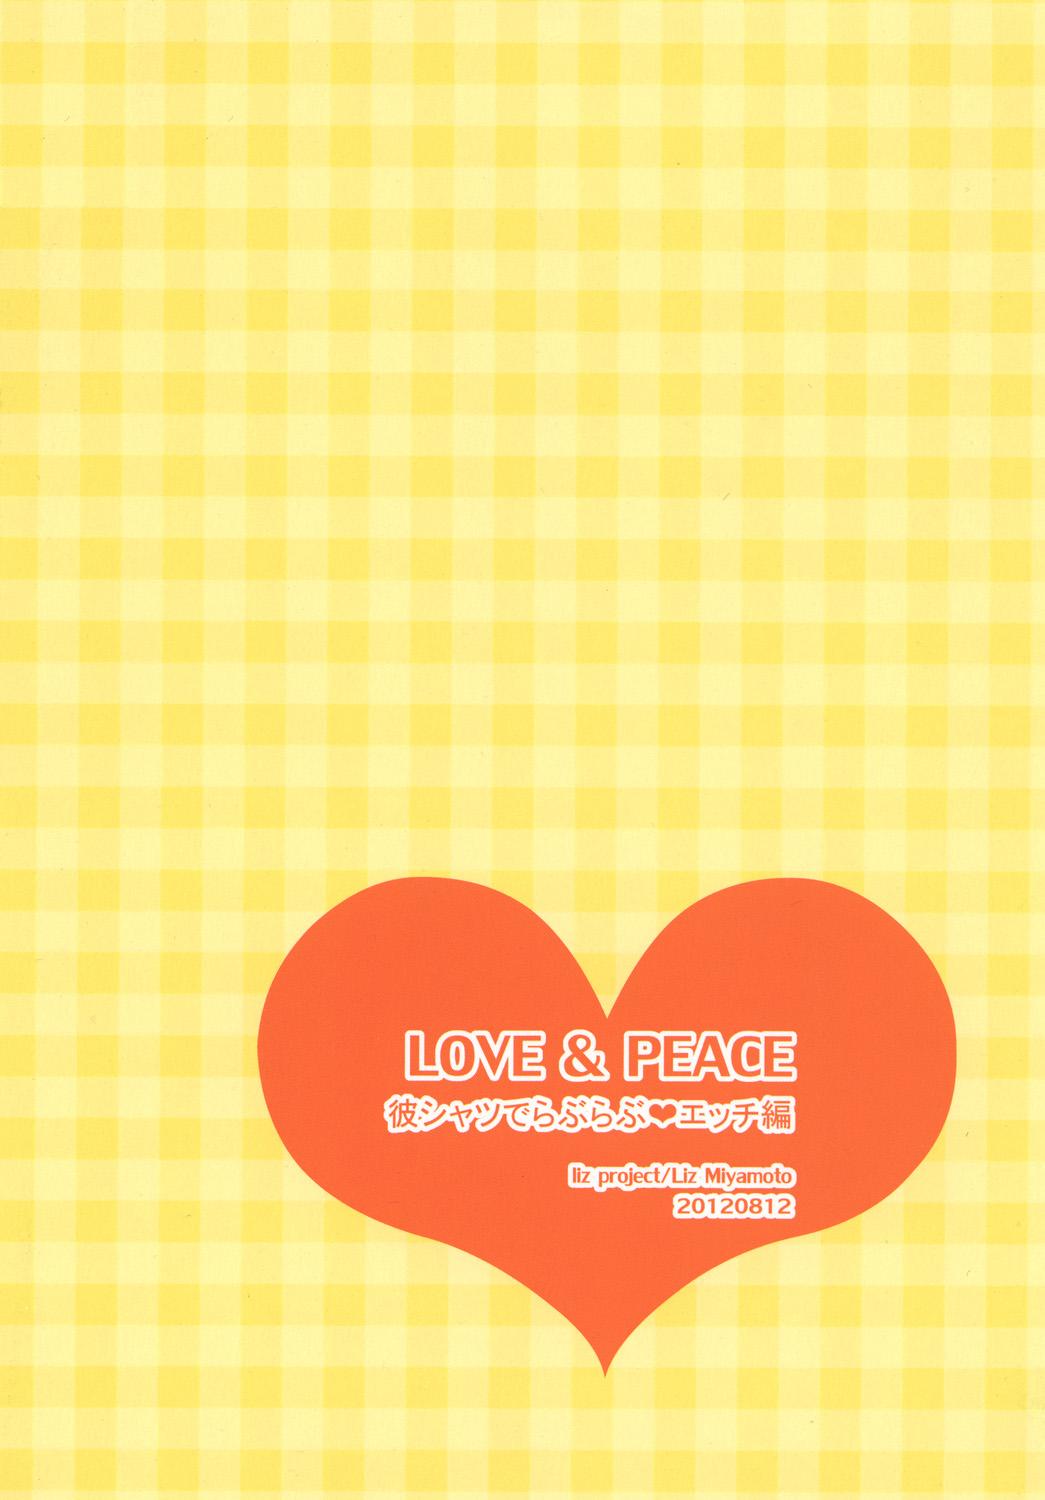 LOVE & PEACE Kare Shirt de Love Love Ecchi Hen 17